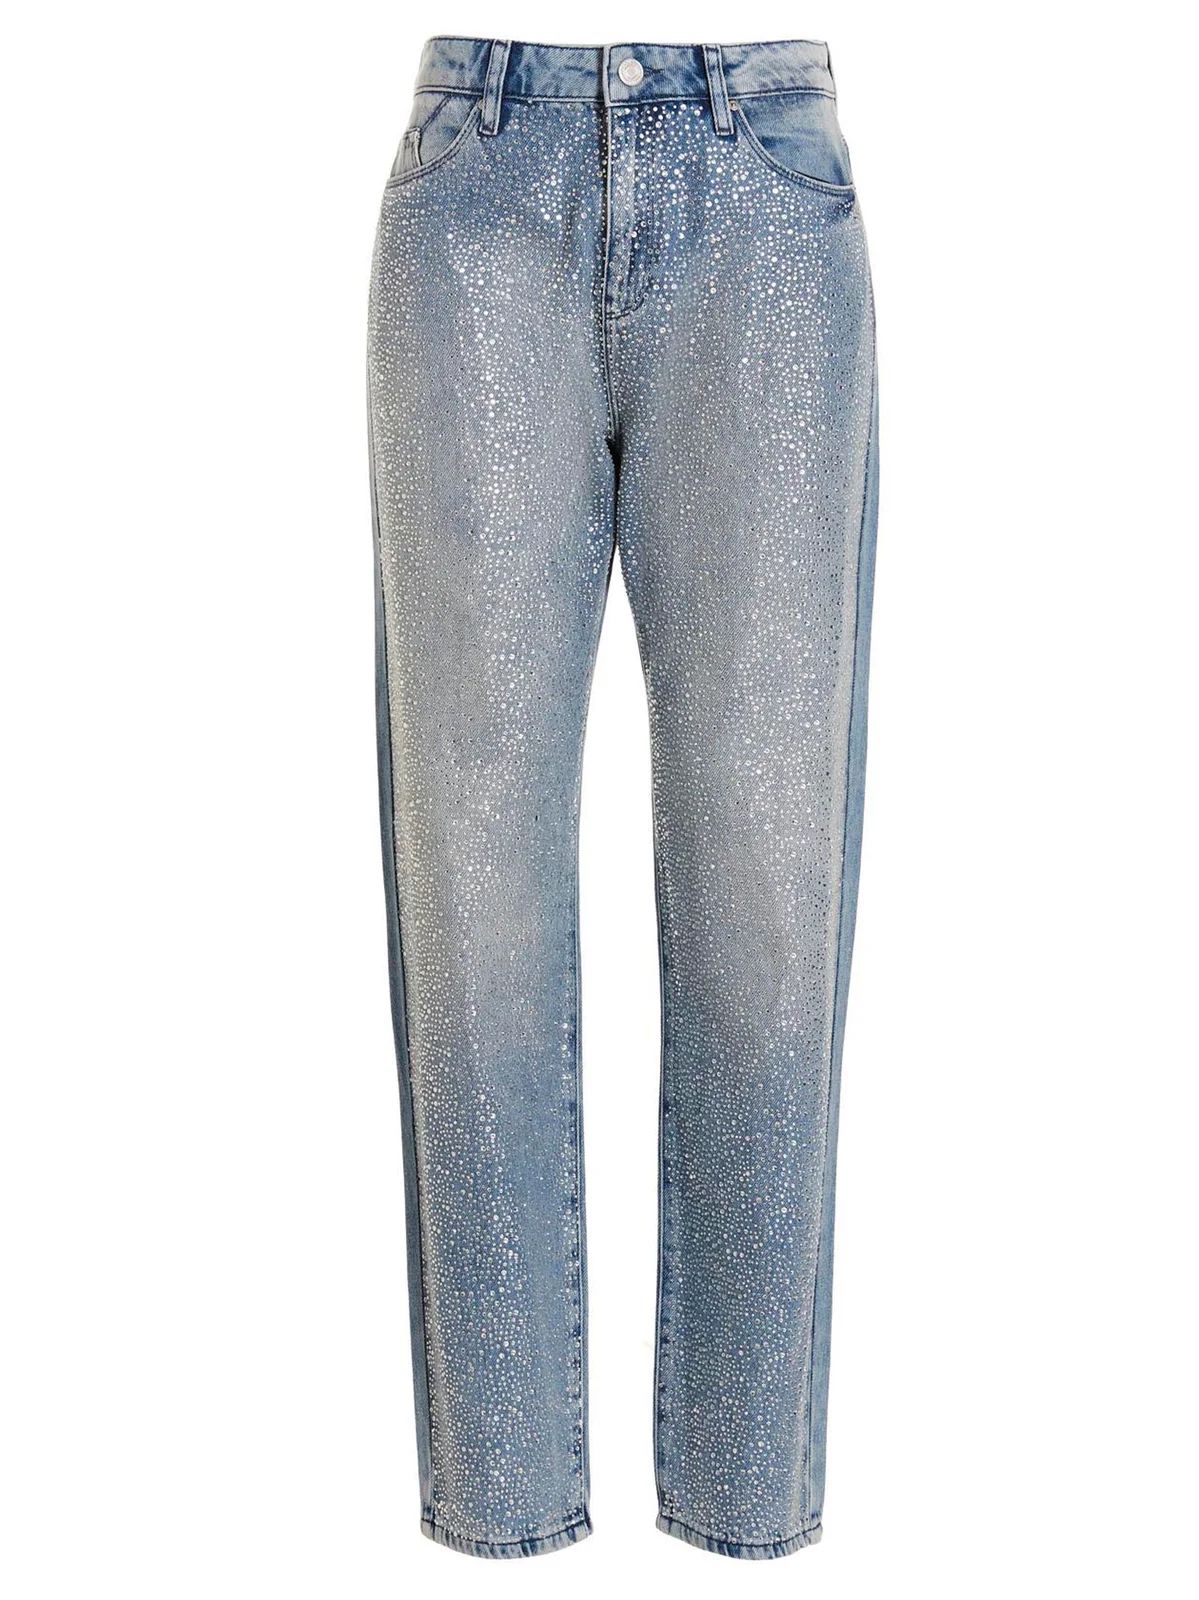 Karl Lagerfeld Embellished Straight-Leg Jeans | Cettire Global